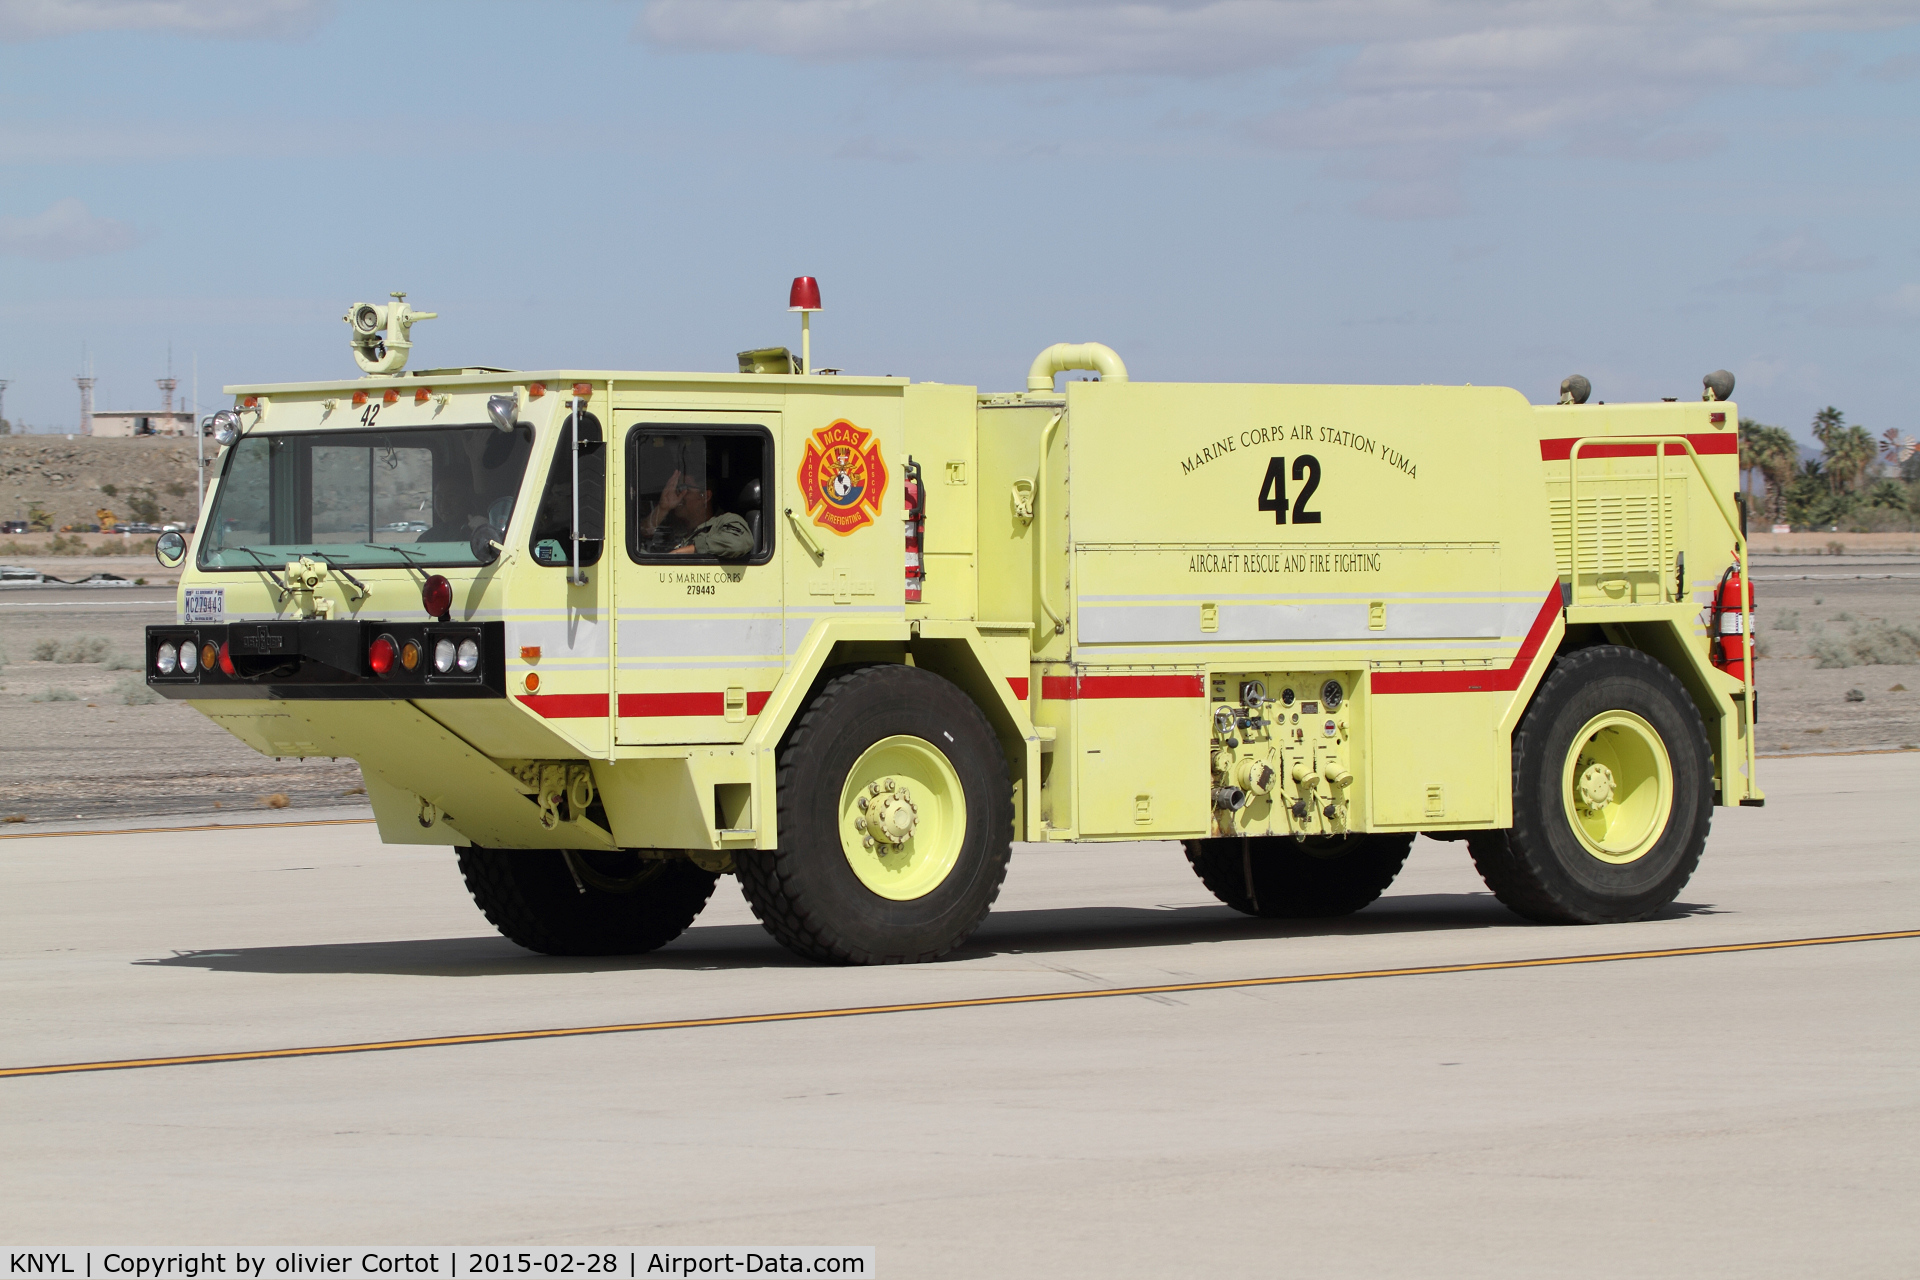 Yuma Mcas/yuma International Airport (NYL) - firetruck on duty